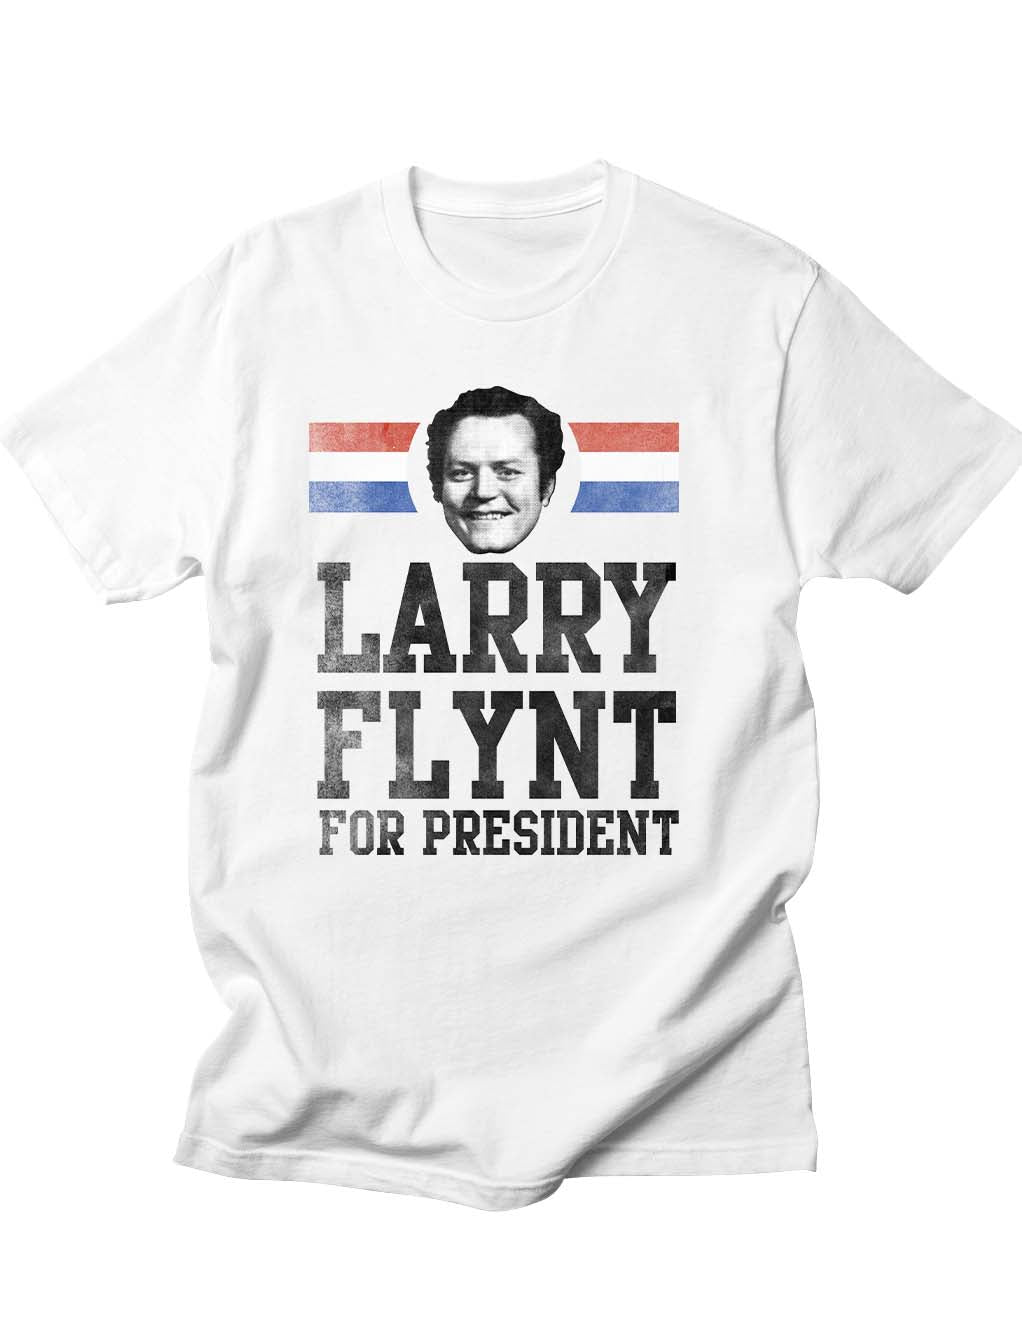 Larry Flynt For President Campaign Tee White